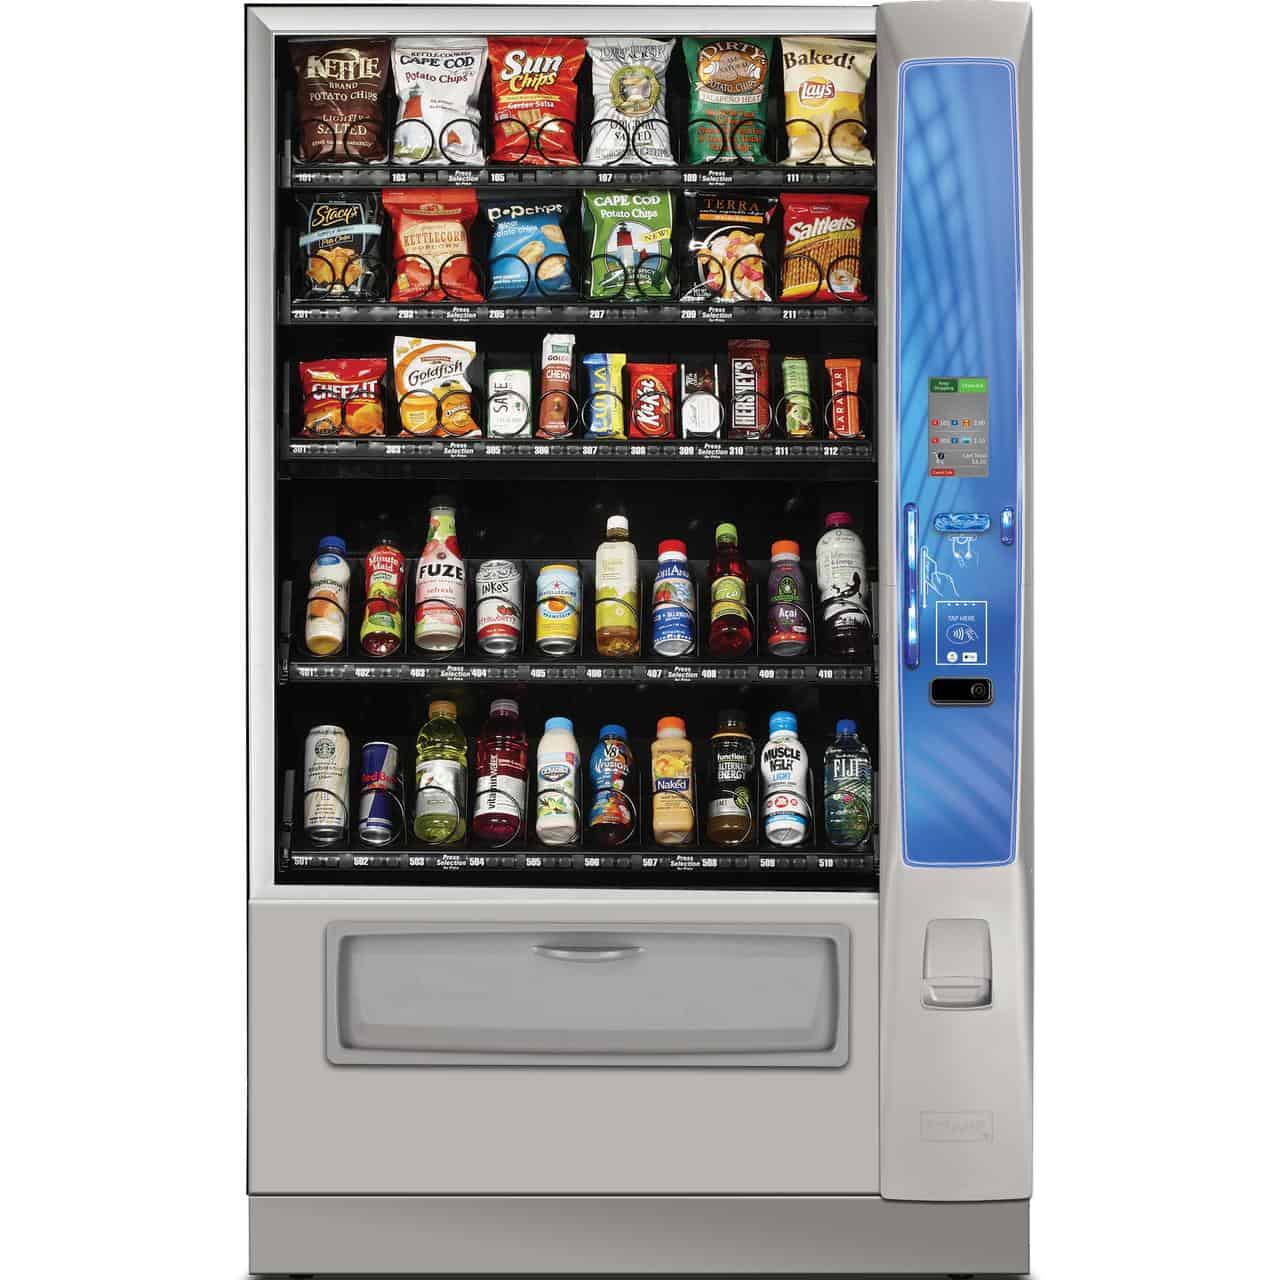 CRANE Merchant Media Food Machine - Model 472 - Vendtek Wholesale